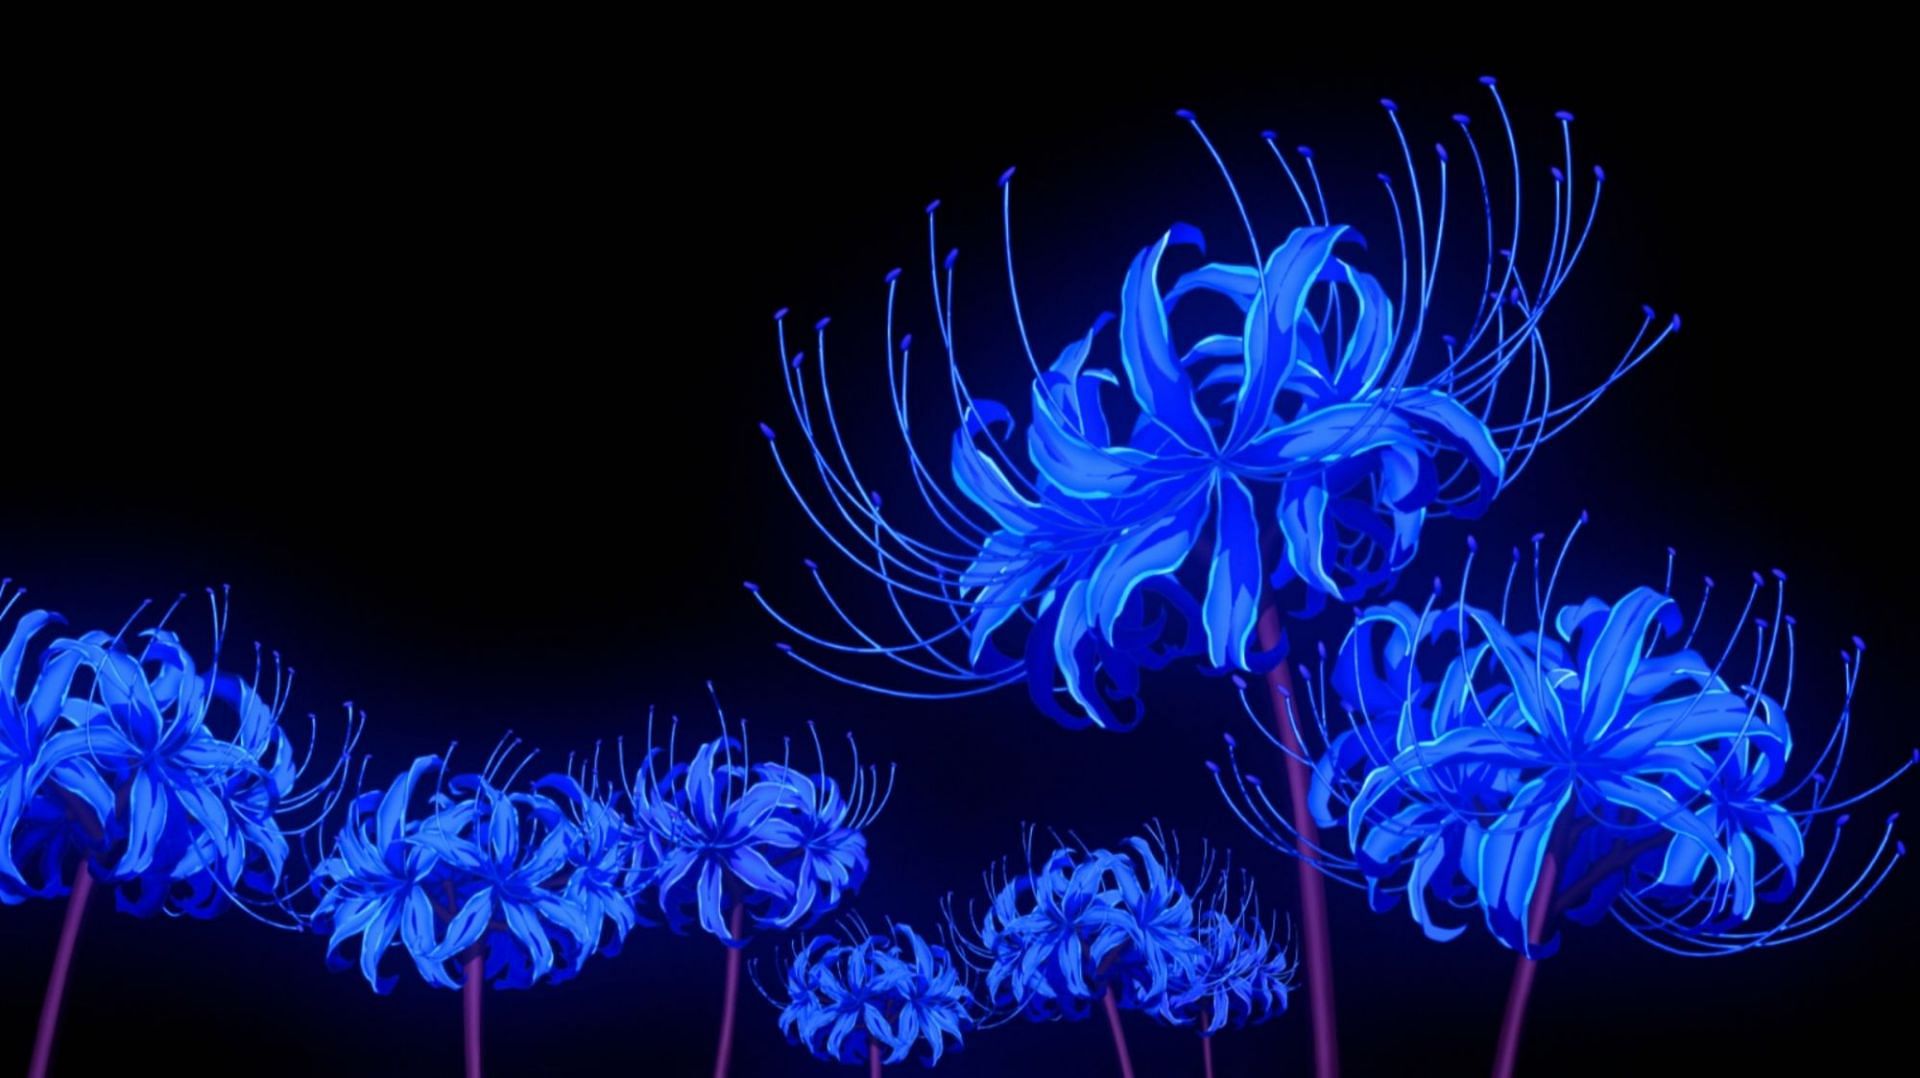 "Blue Spider Lily" as seen in the anime Demon Slayer: Kimetsu no Yaiba (Image via Ufotable)